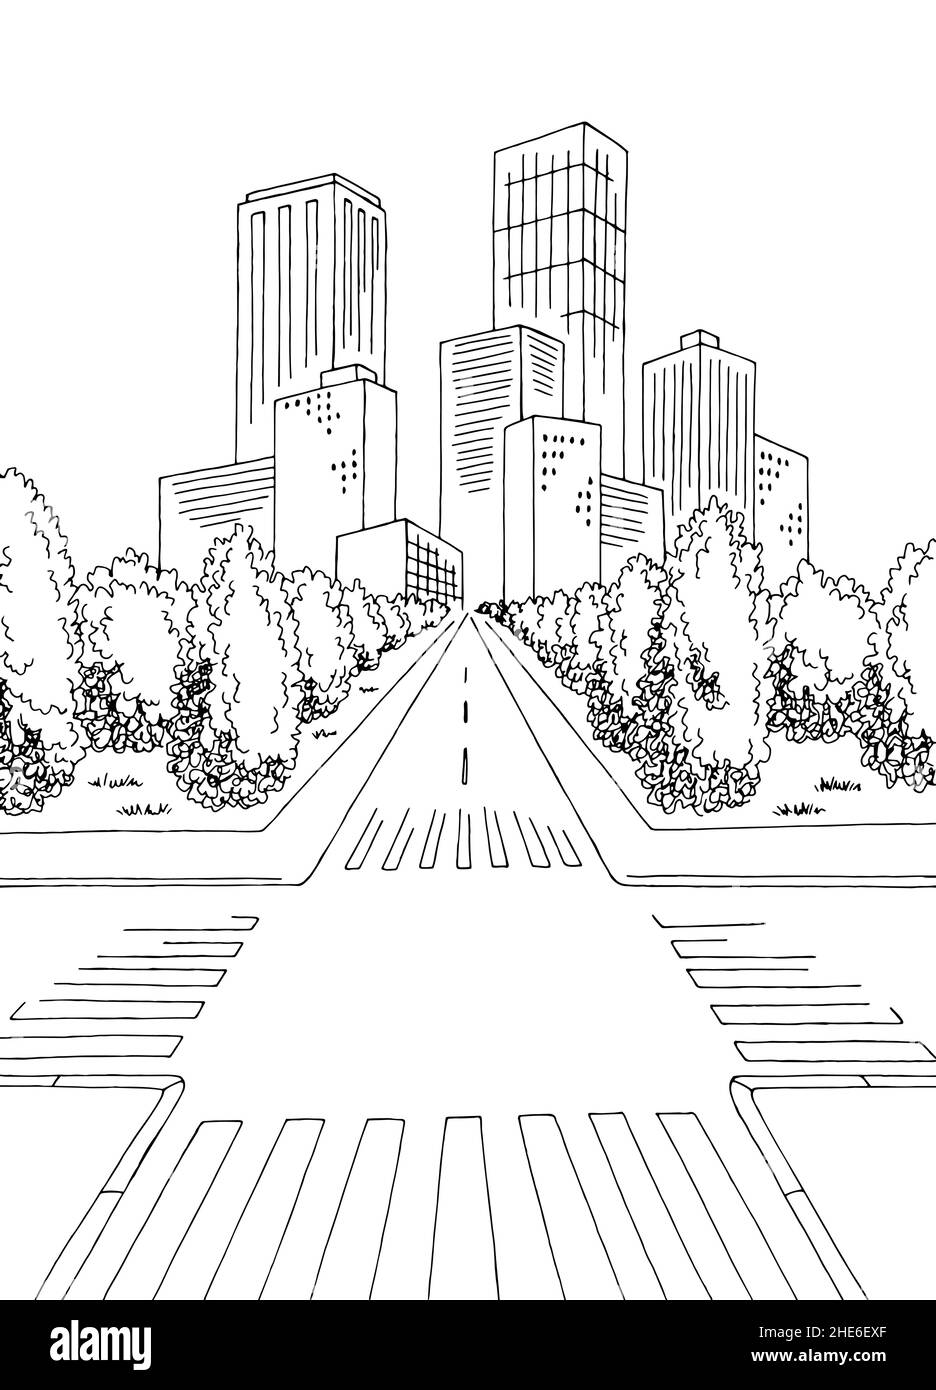 Crossroad-Grafik schwarz weiß vertikale Landschaft Skizze Illustration Vektor Stock Vektor